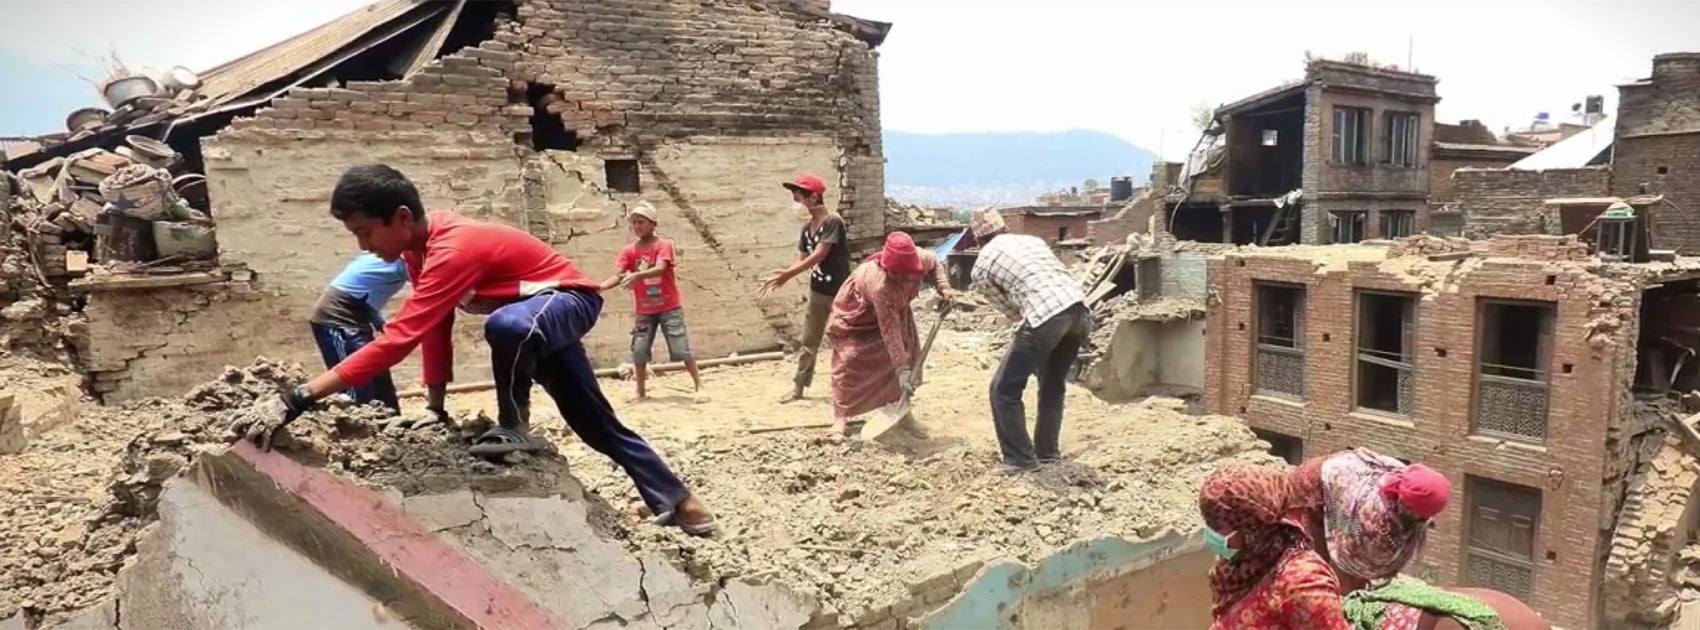 Rebuilding Nepal one brick at a time. Photo credit: World Bank